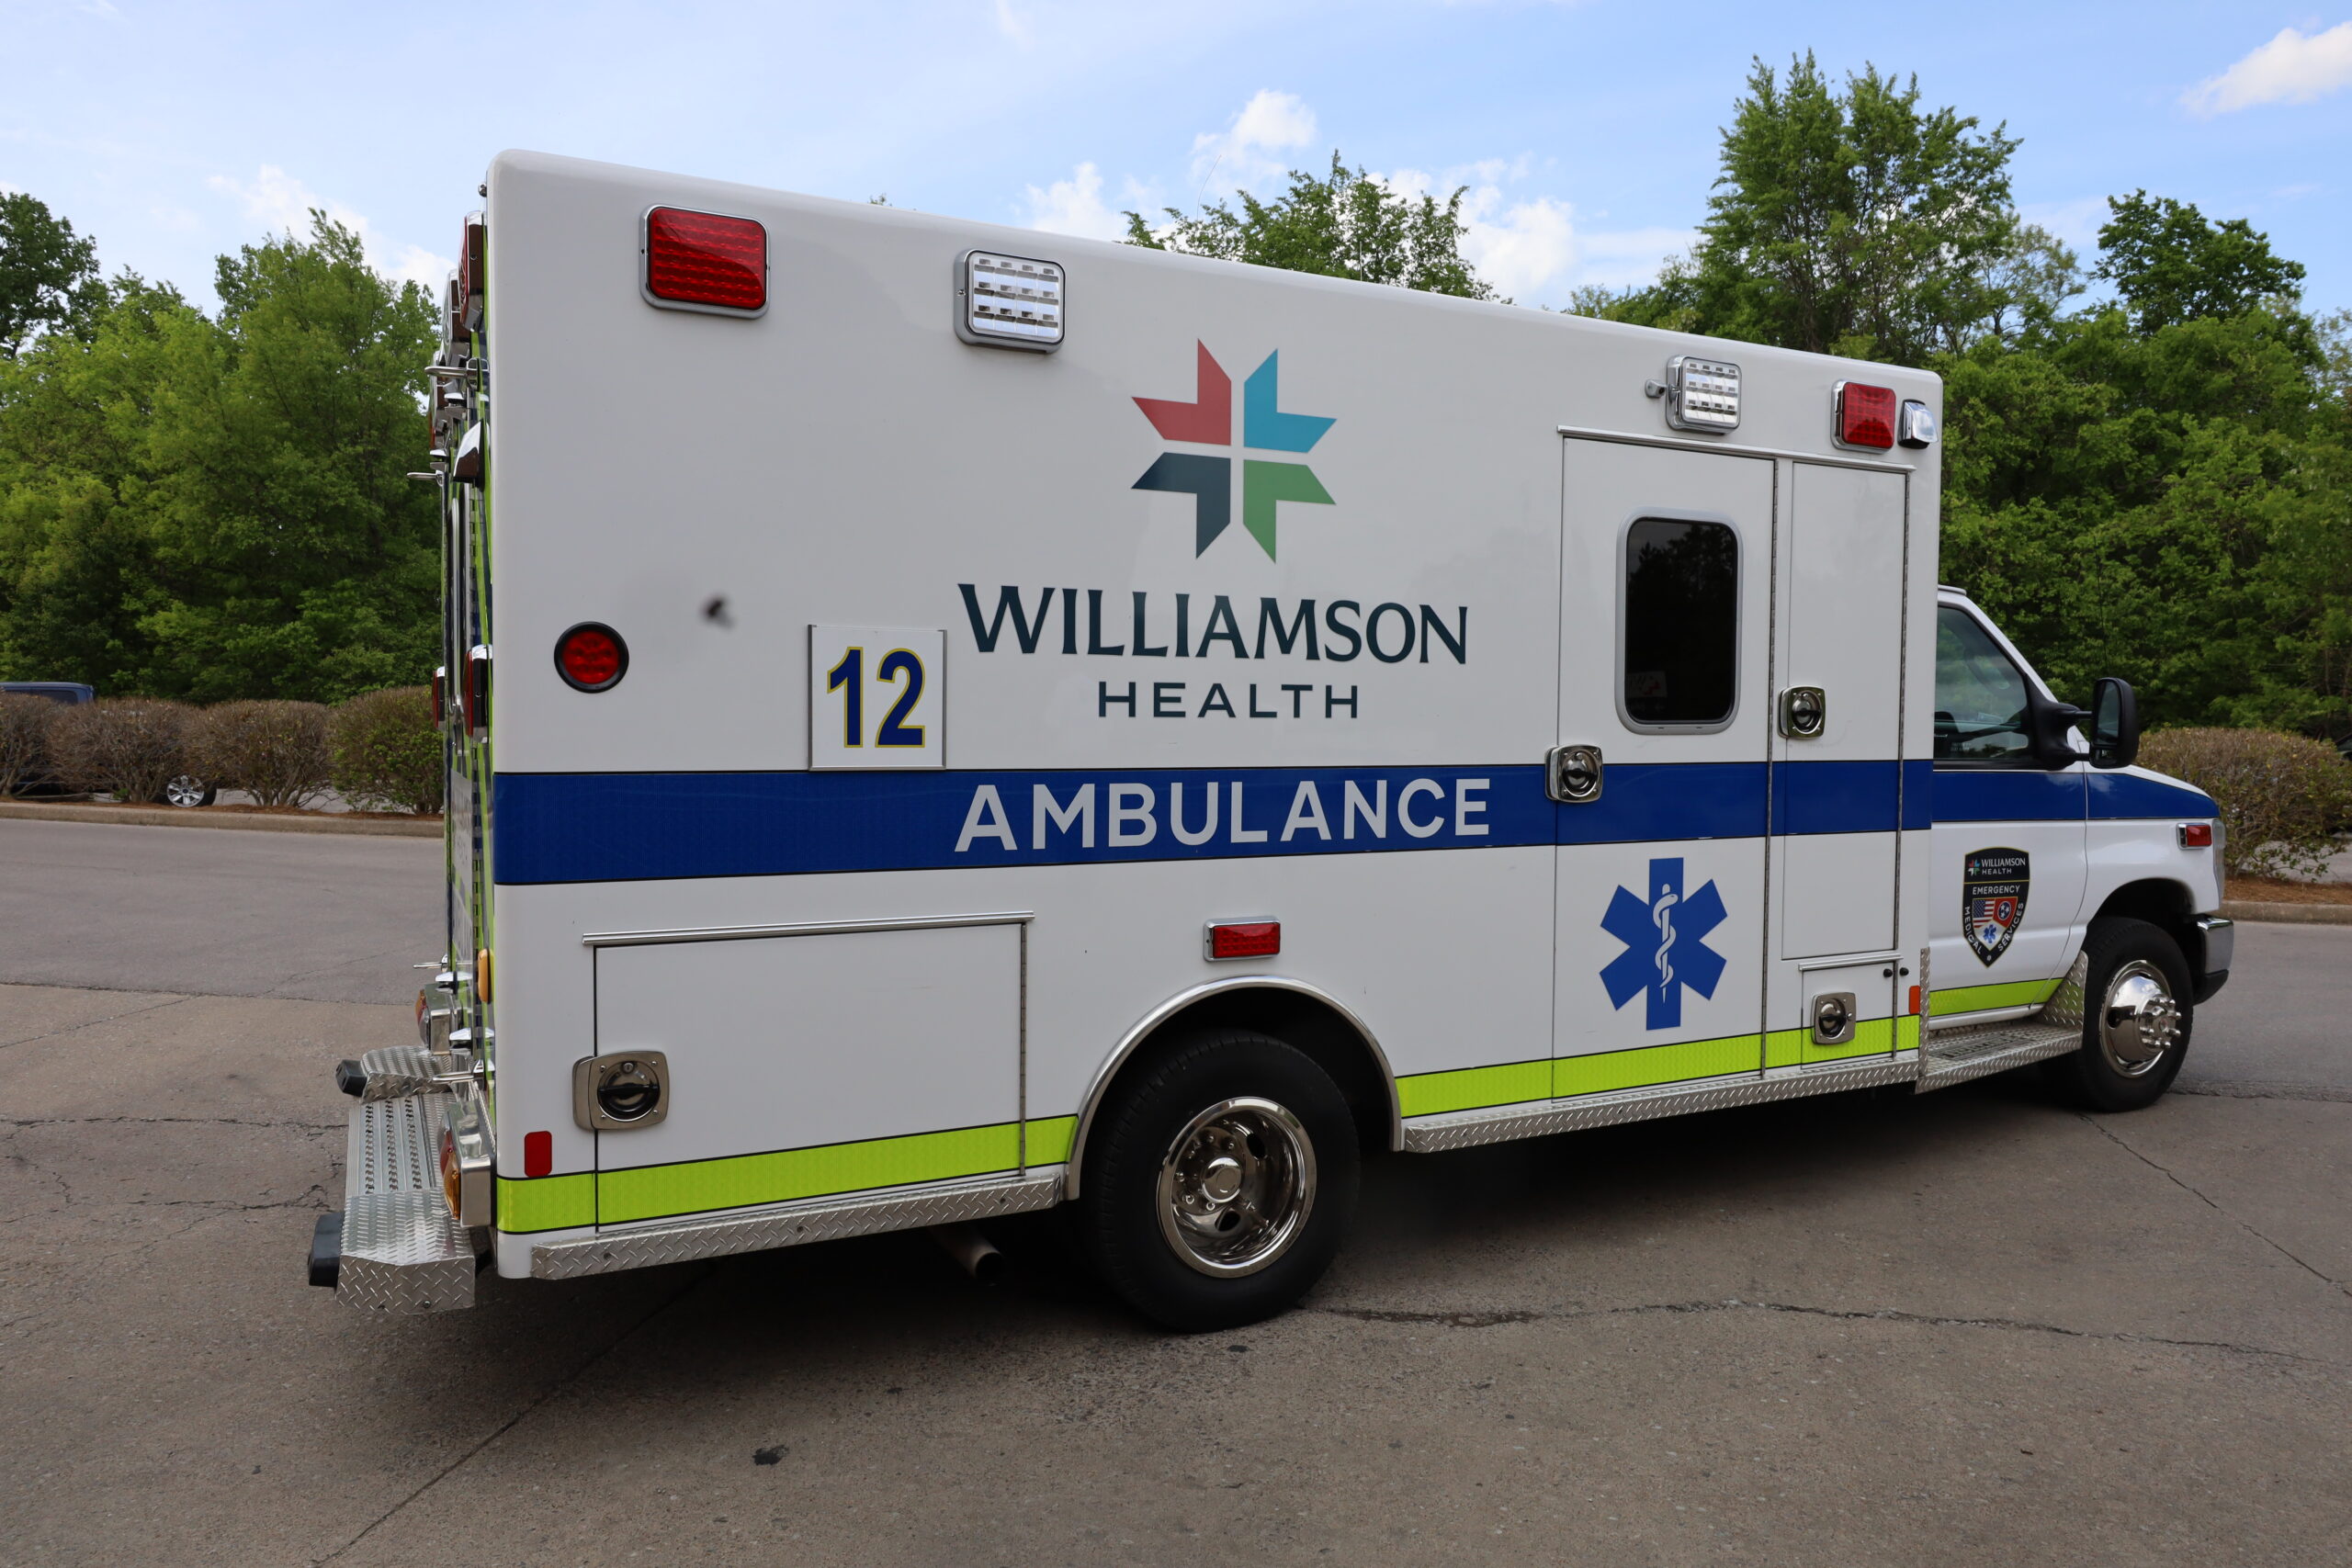 A Williamson Health ambulance